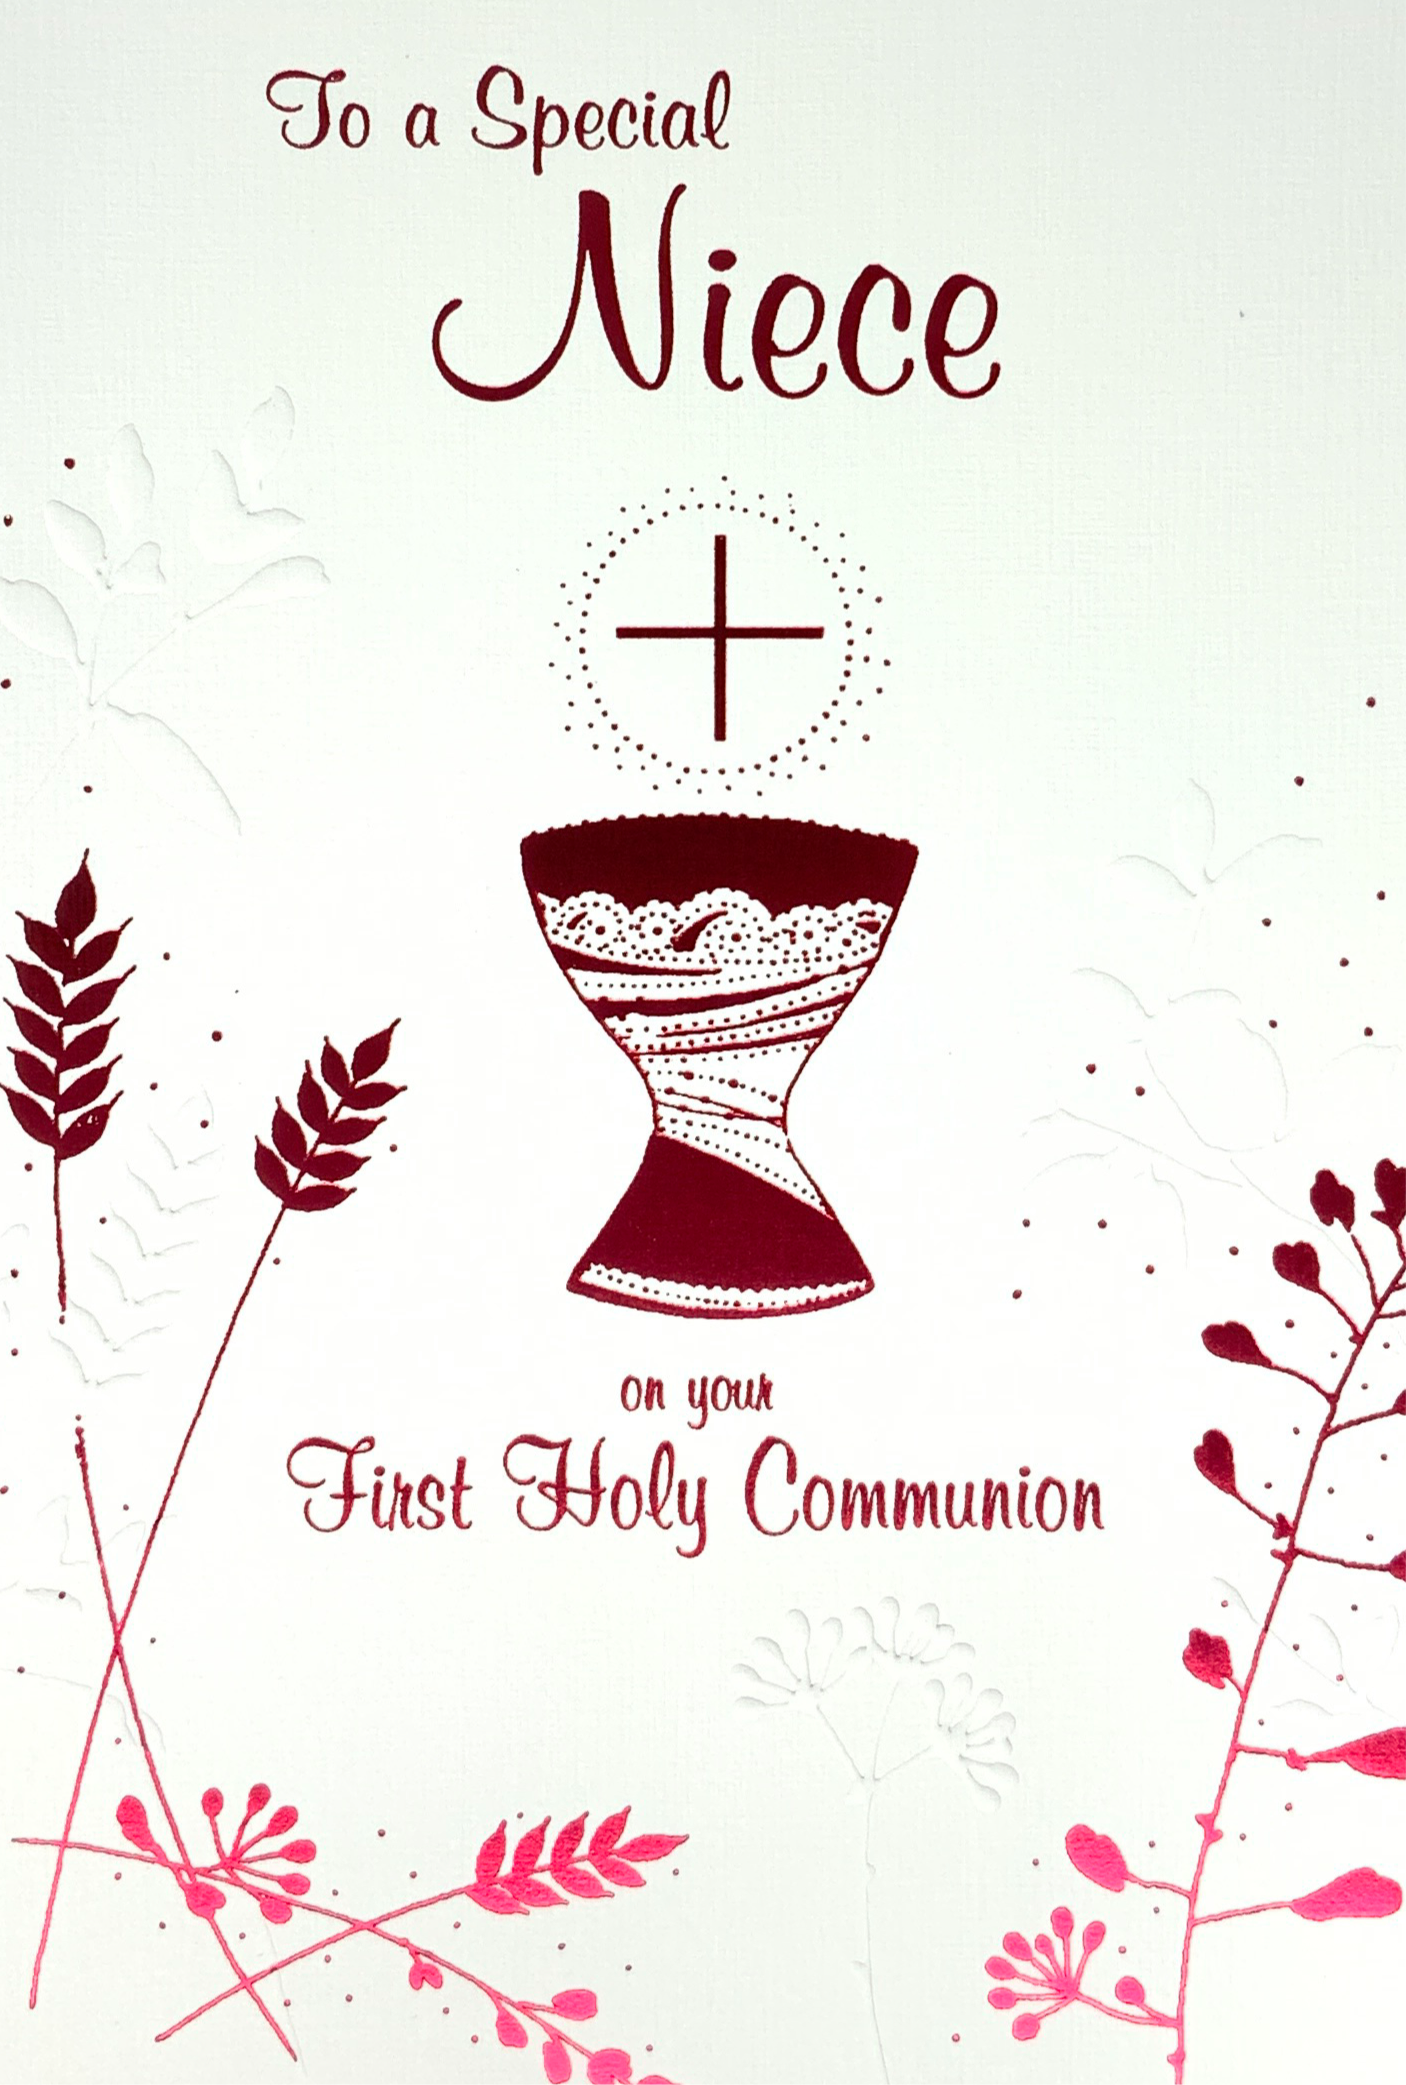 Communion Card - Niece / To A Wonderful Child